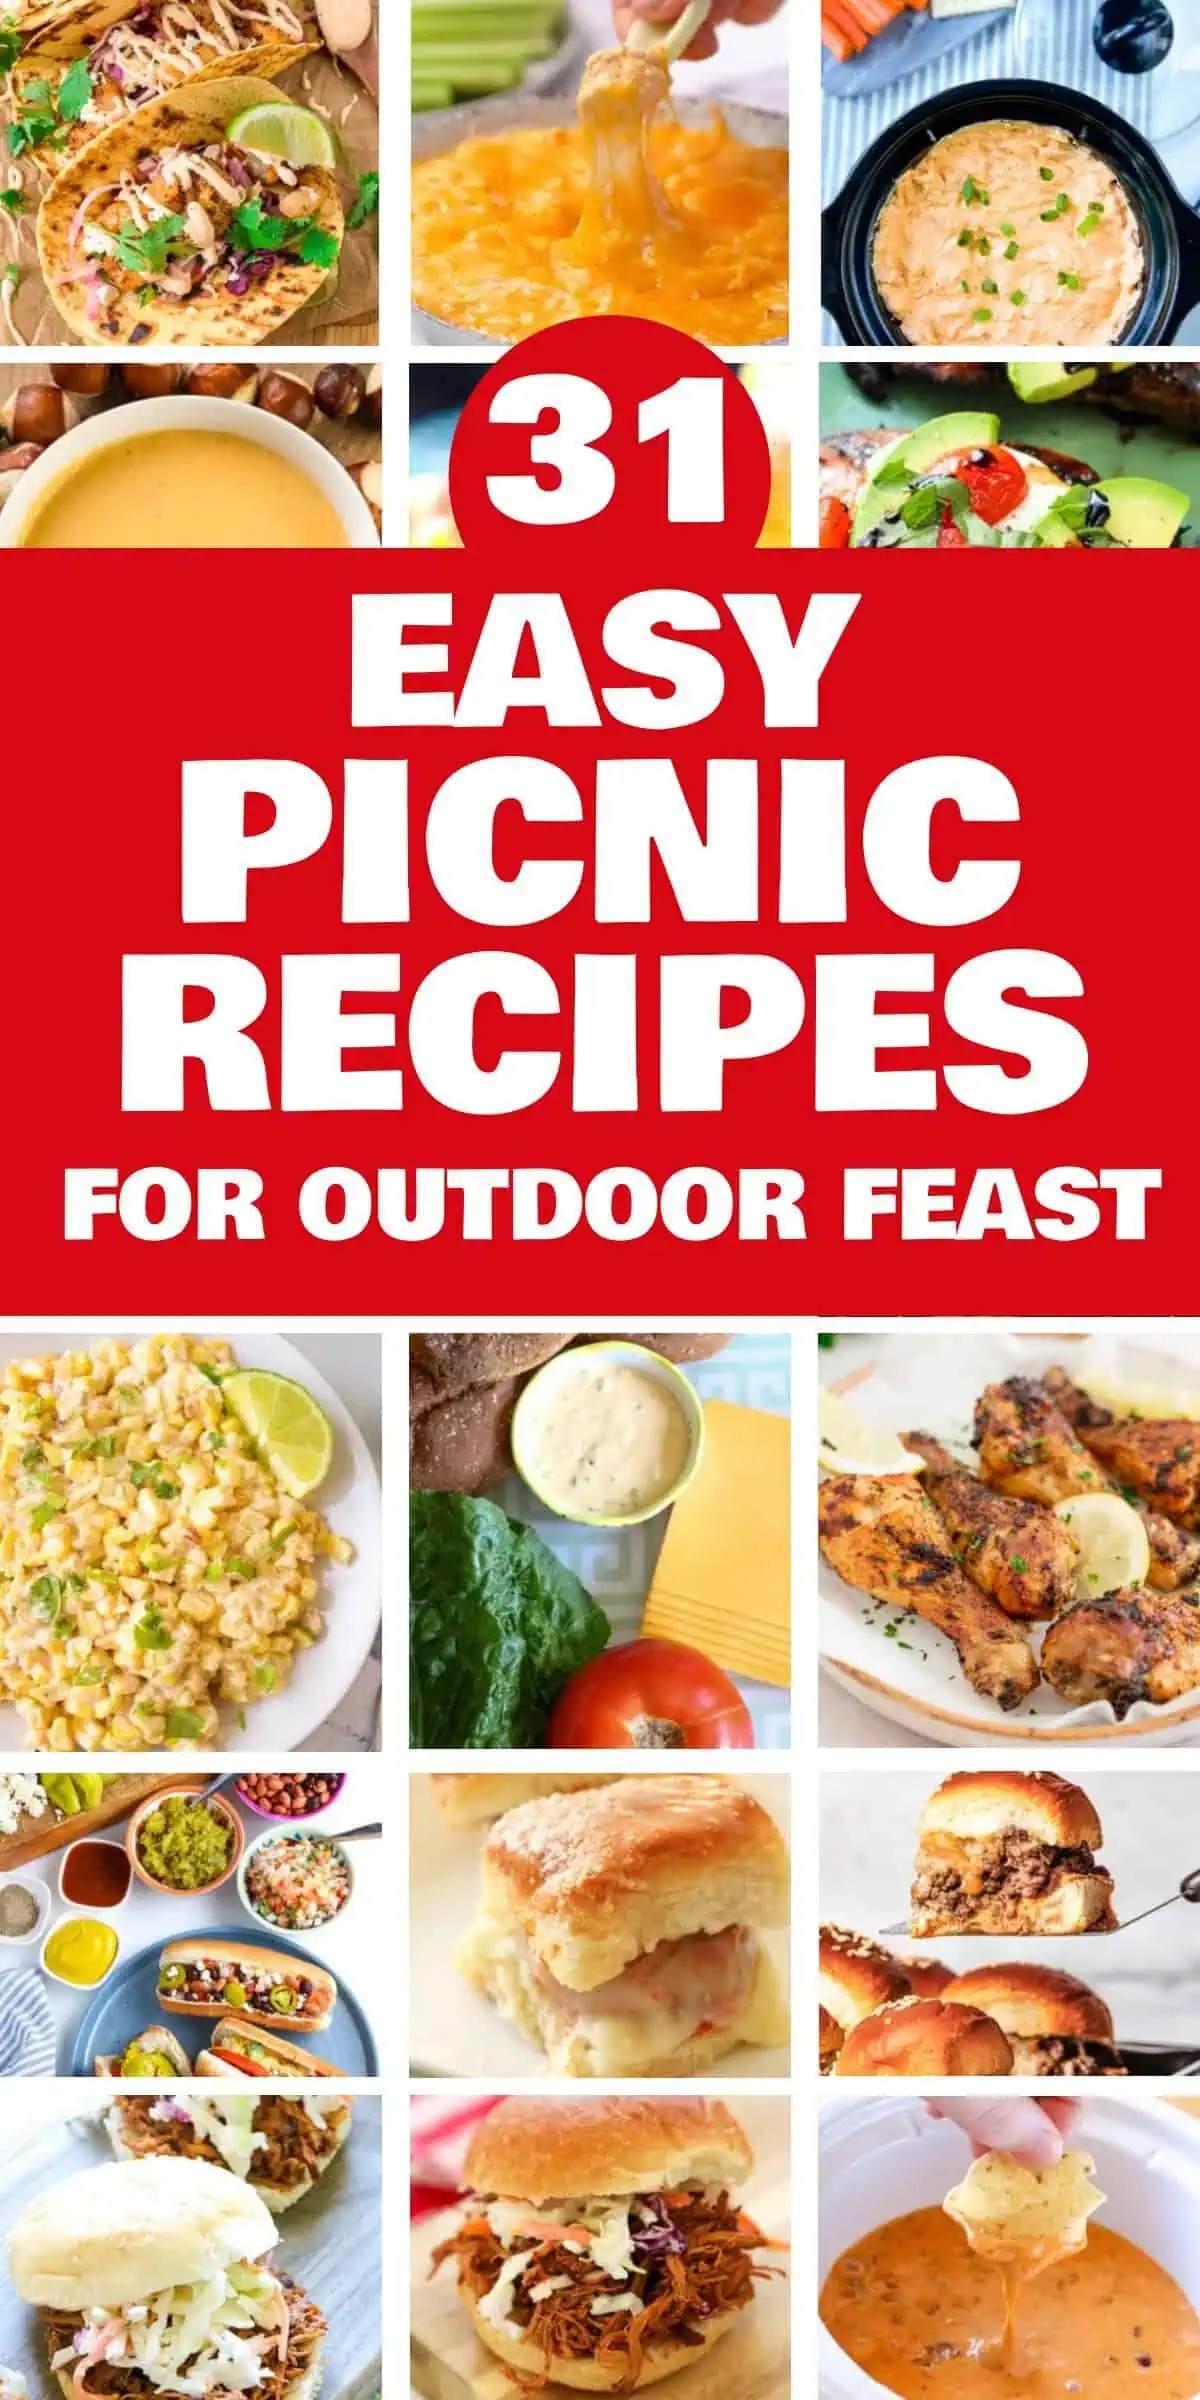 31 Easy Picnic Recipes